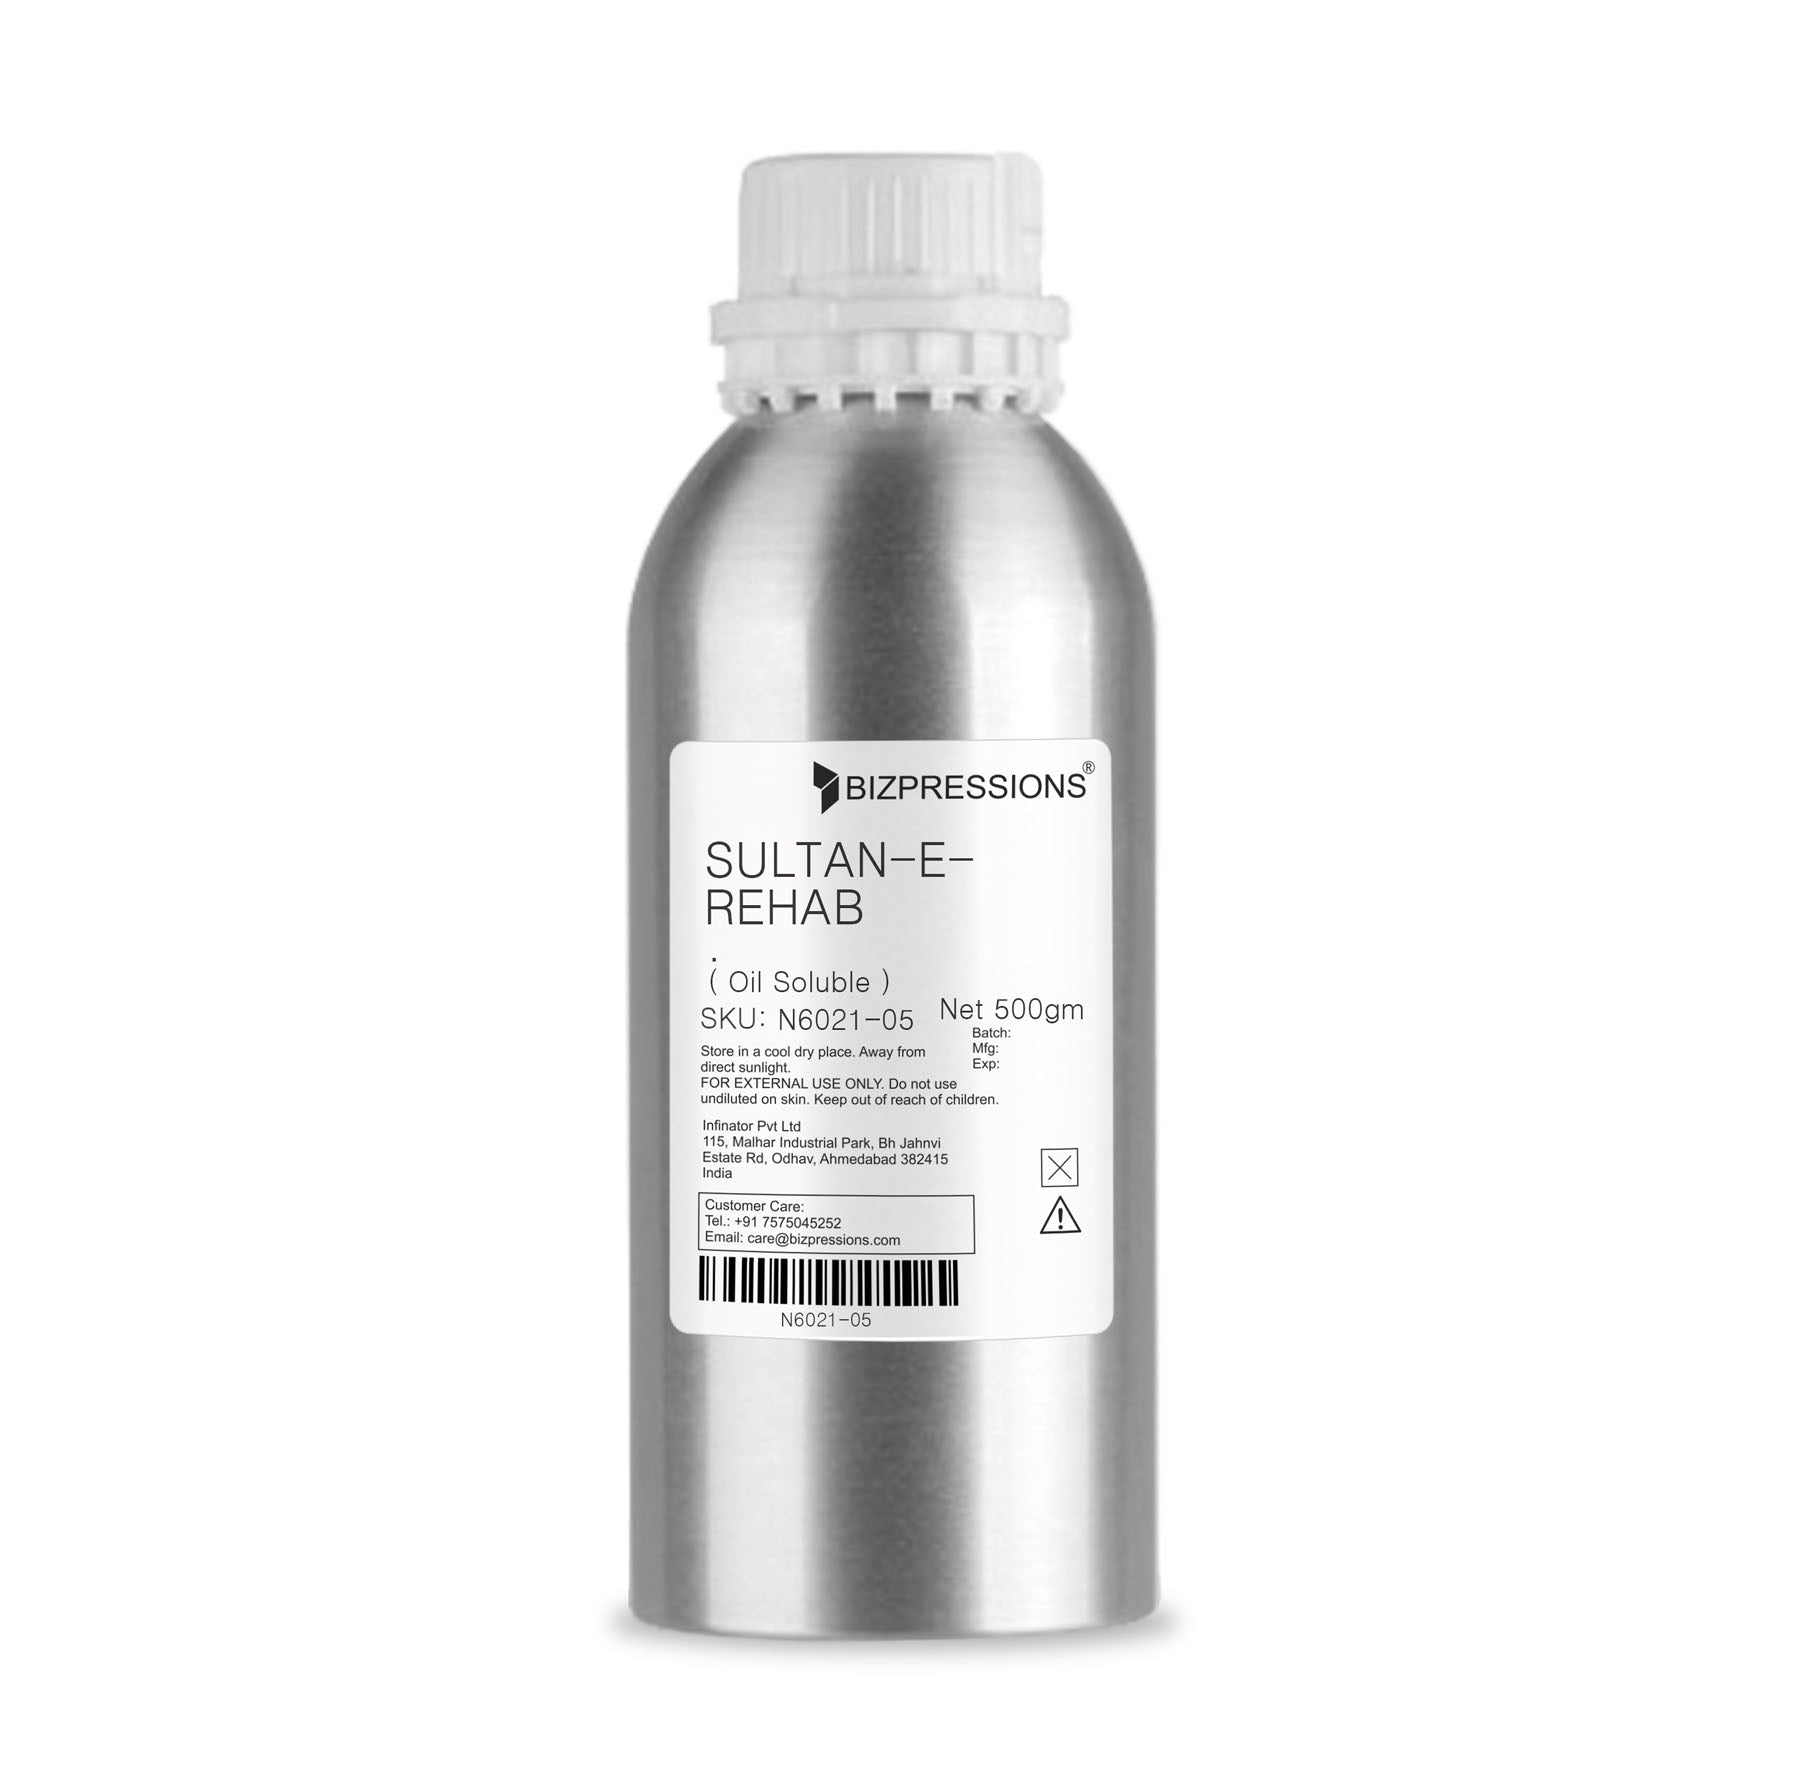 SULTAN-E-REHAB - Fragrance ( Oil Soluble ) - 500 gm